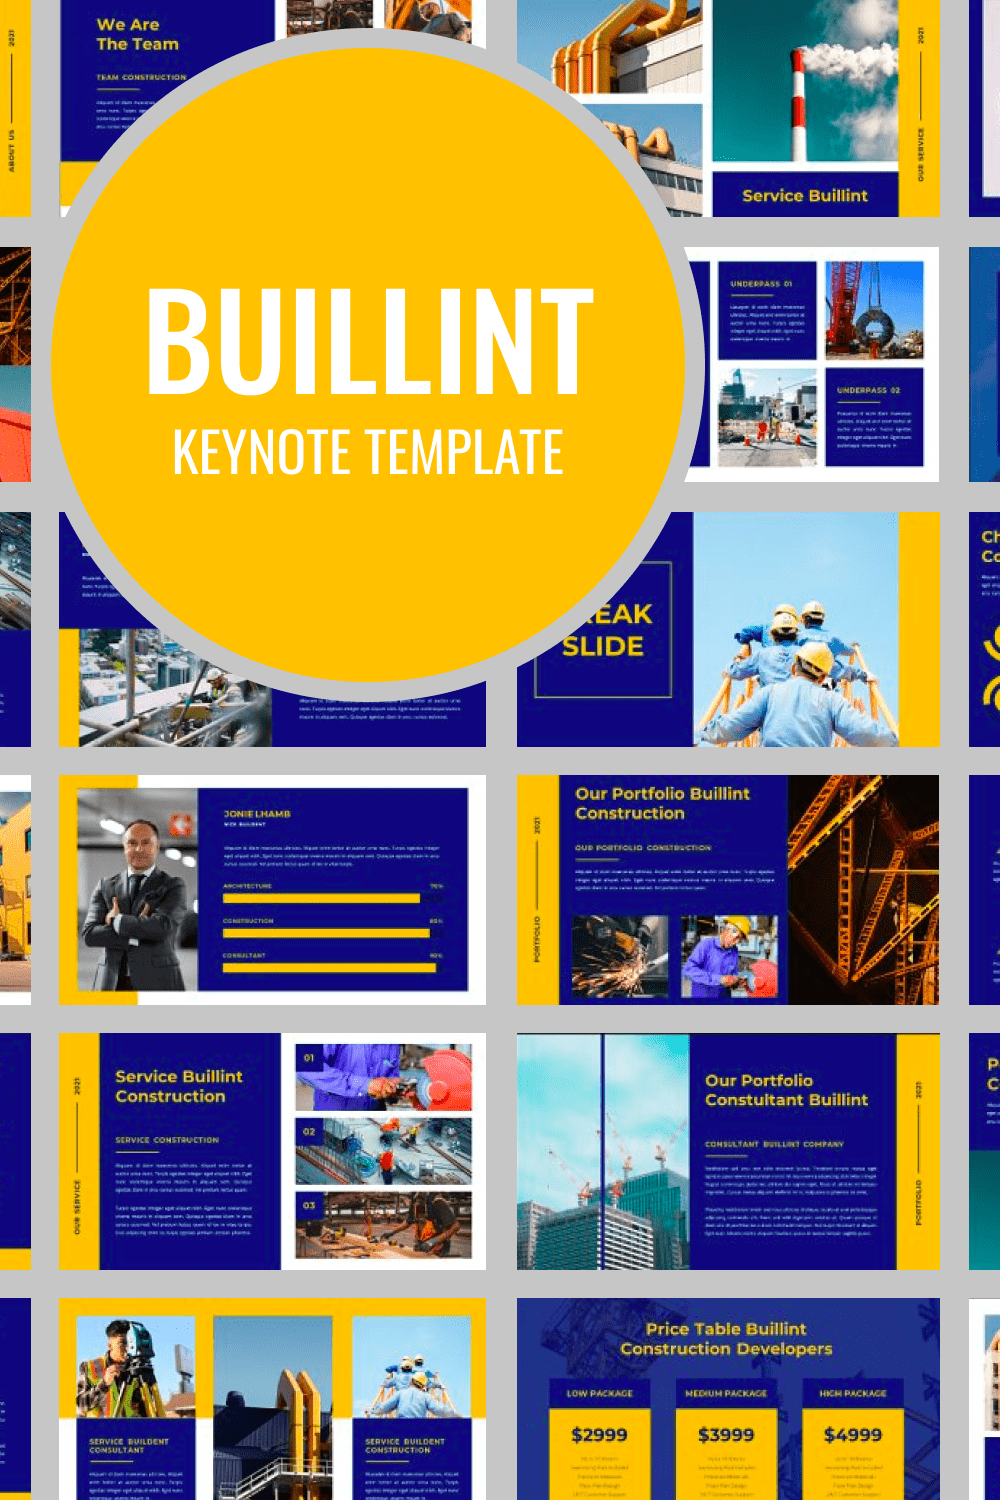 BUILLINT Keynote Template by MasterBundles Pinterest Collage Image.